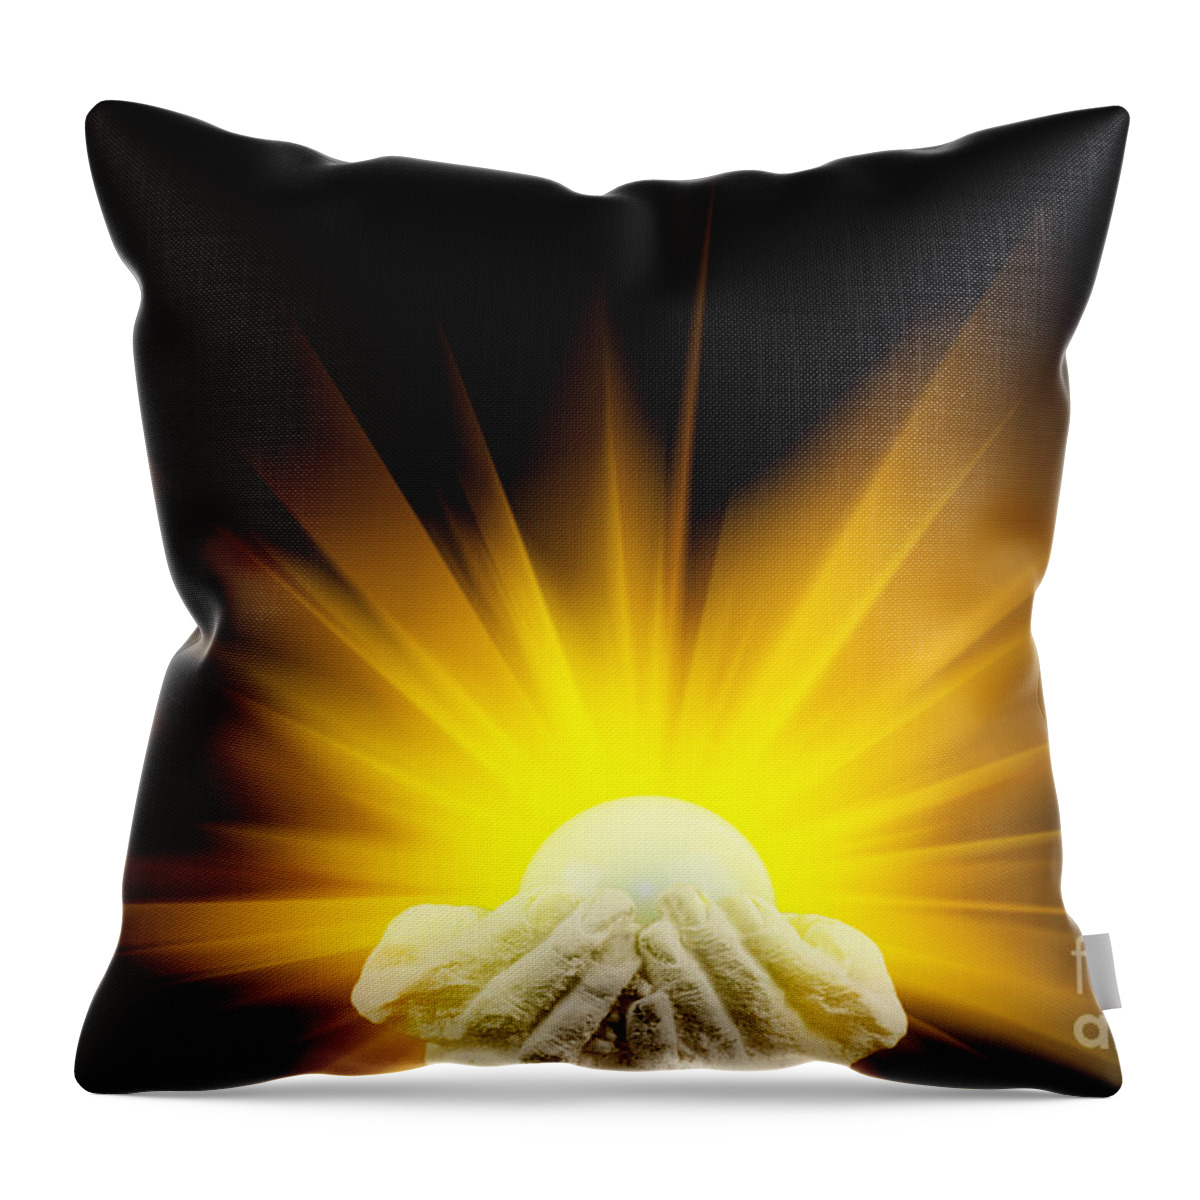 Spiritual Throw Pillow featuring the photograph Spiritual light in cupped hands by Simon Bratt